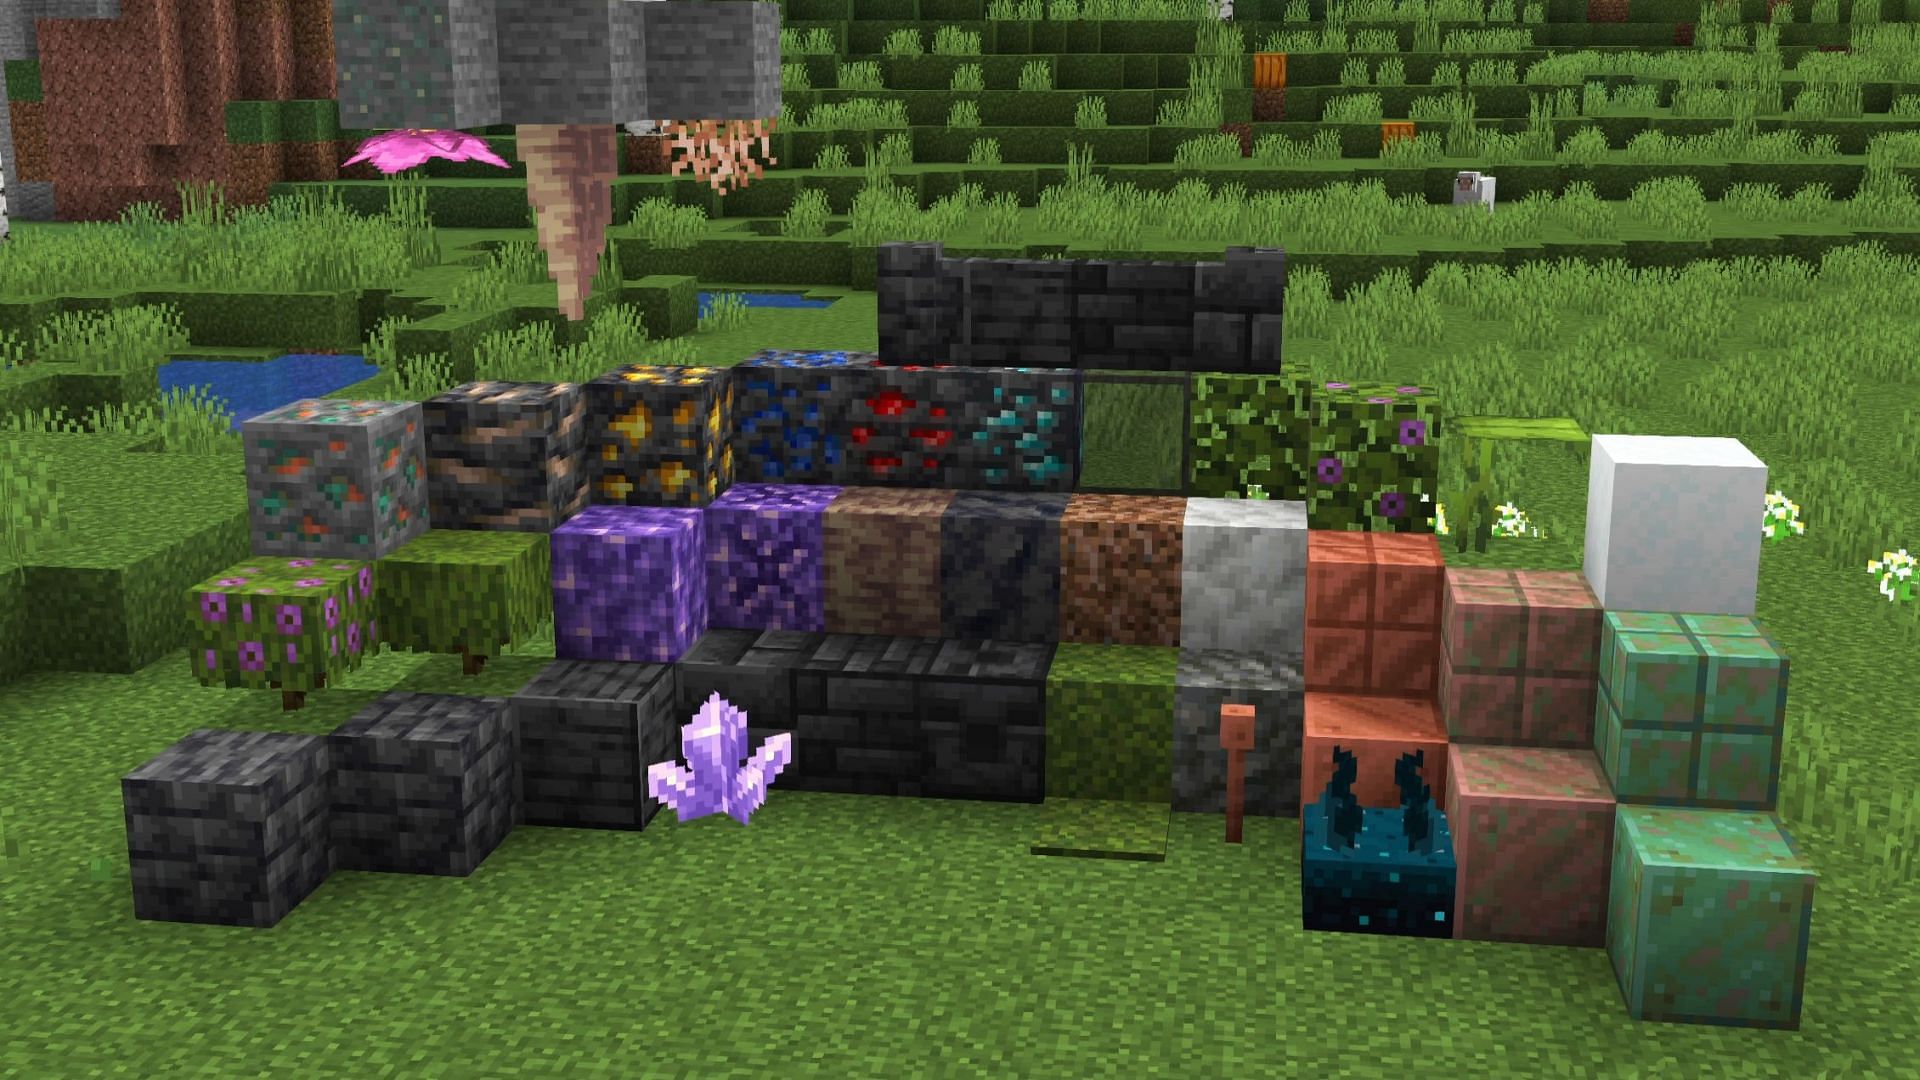 Blocks in Minecraft Caves and Cliffs update (Image via Minecraft)